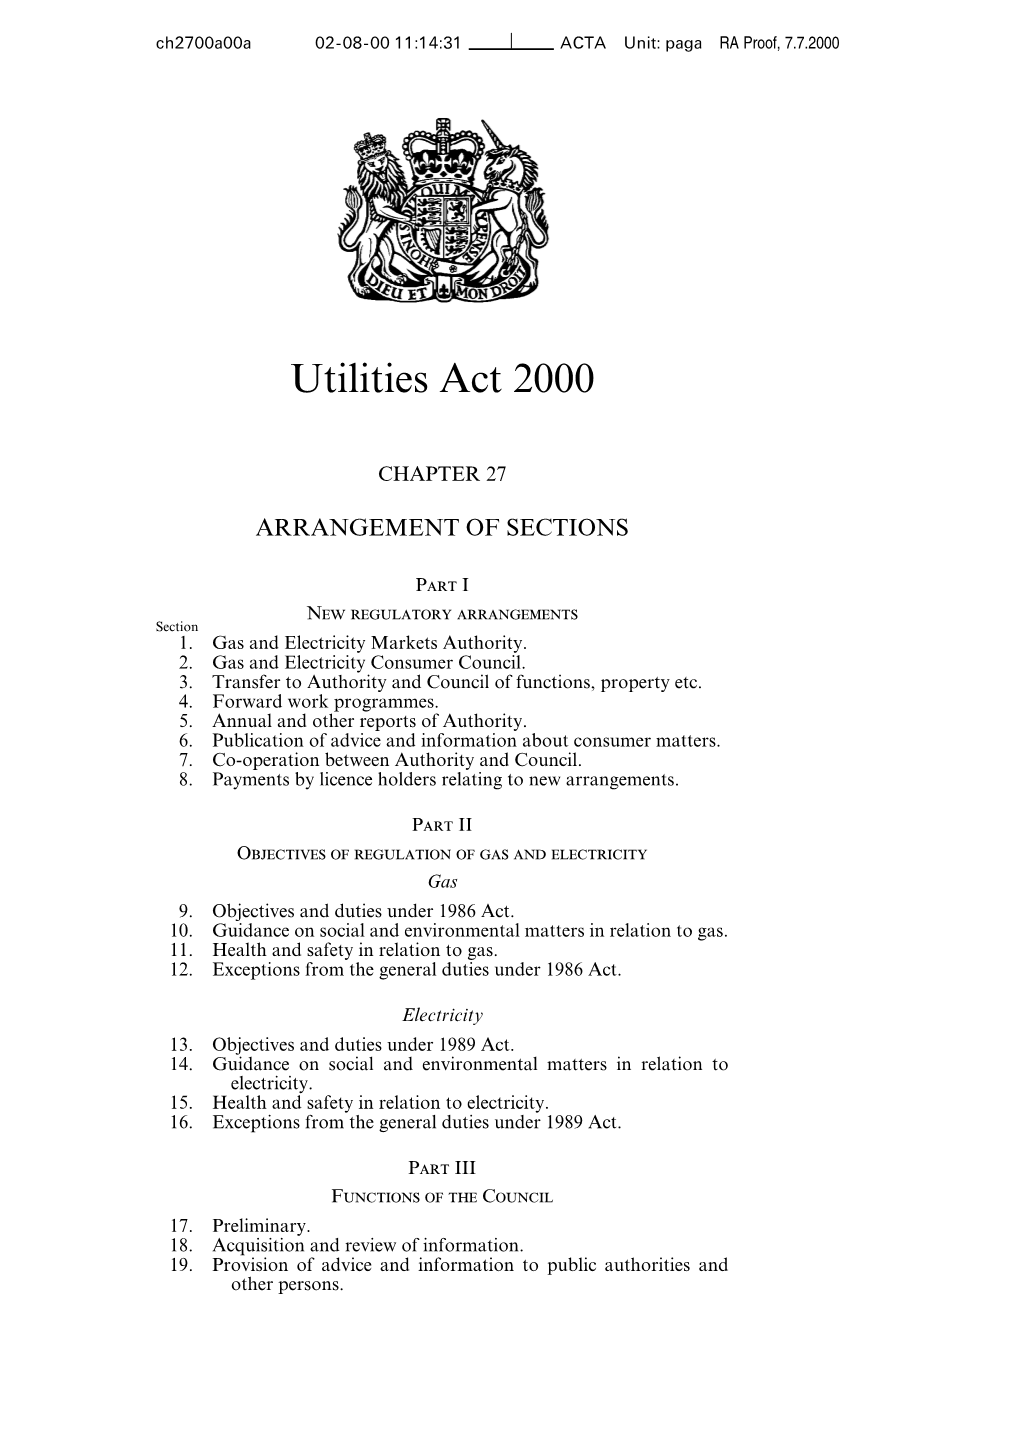 Utilities Act 2000